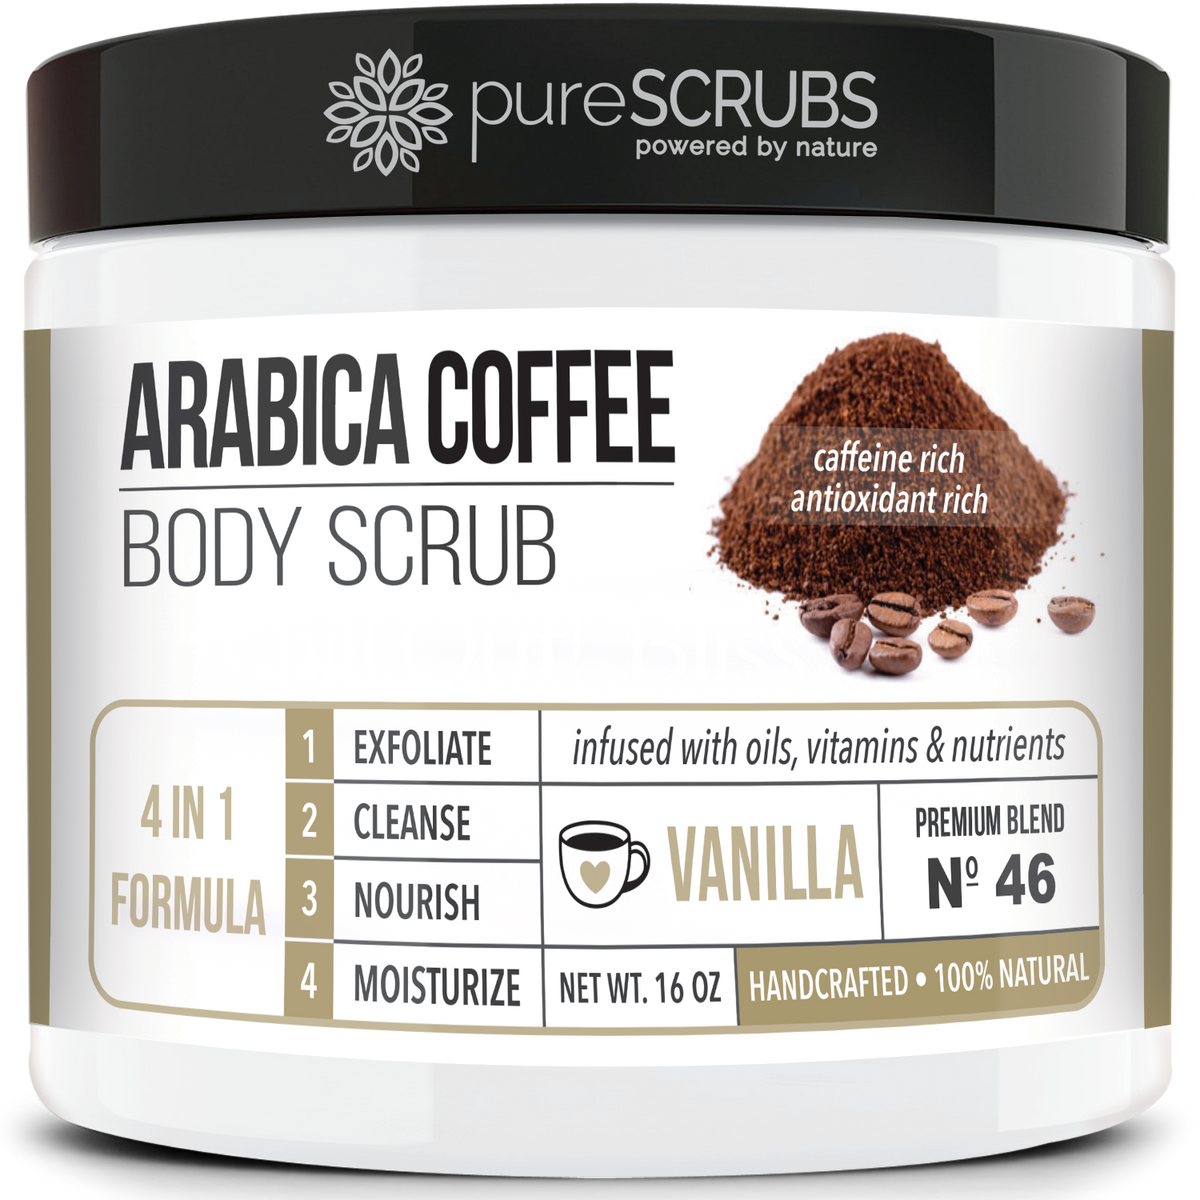 Vanilla Body Scrub / Arabica Coffee / Premium Blend #46